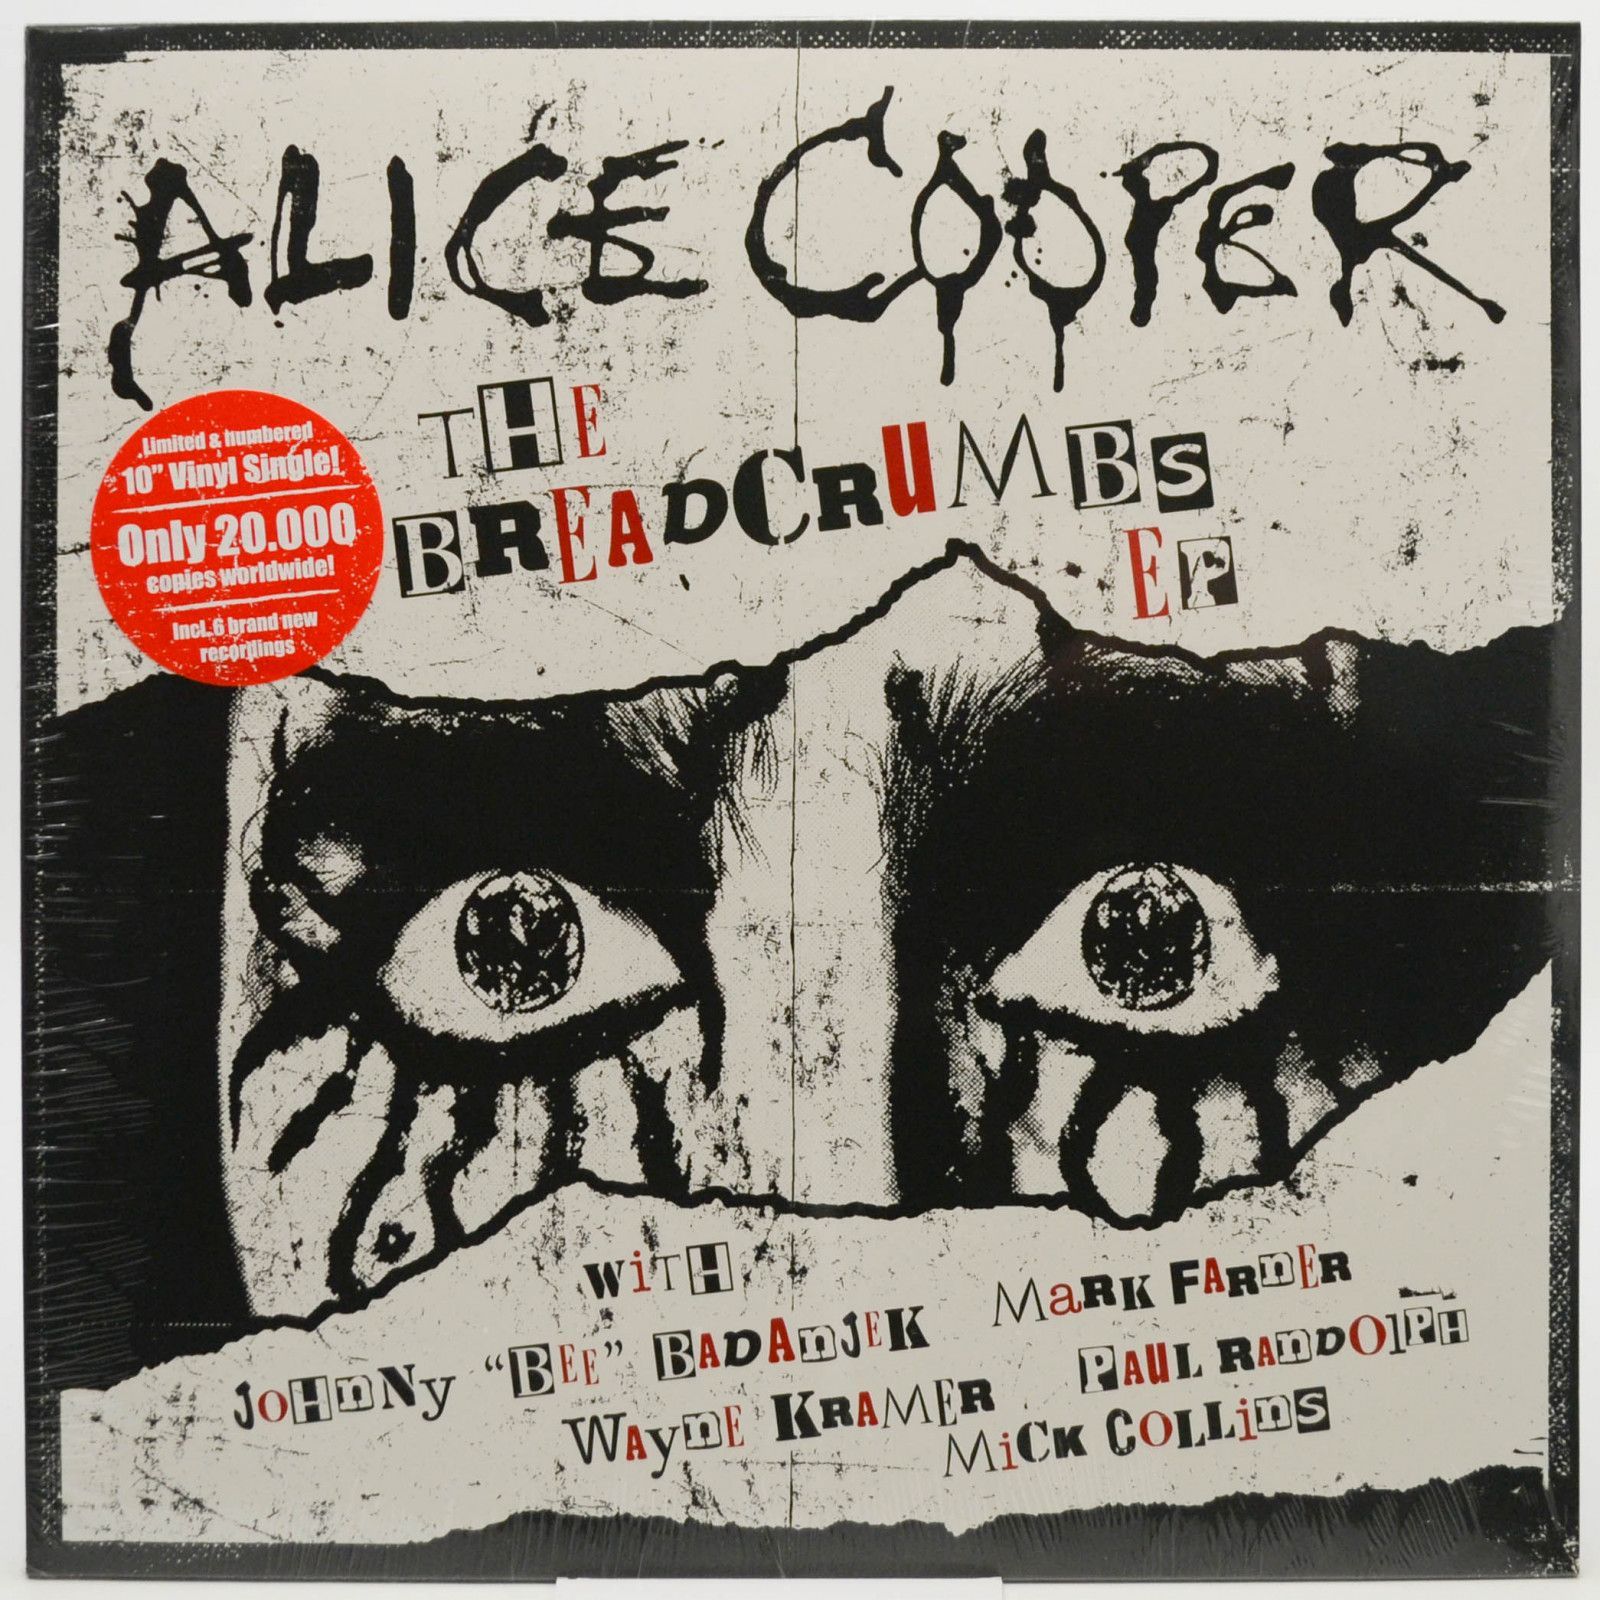 Alice Cooper — The Breadcrumbs EP, 2019